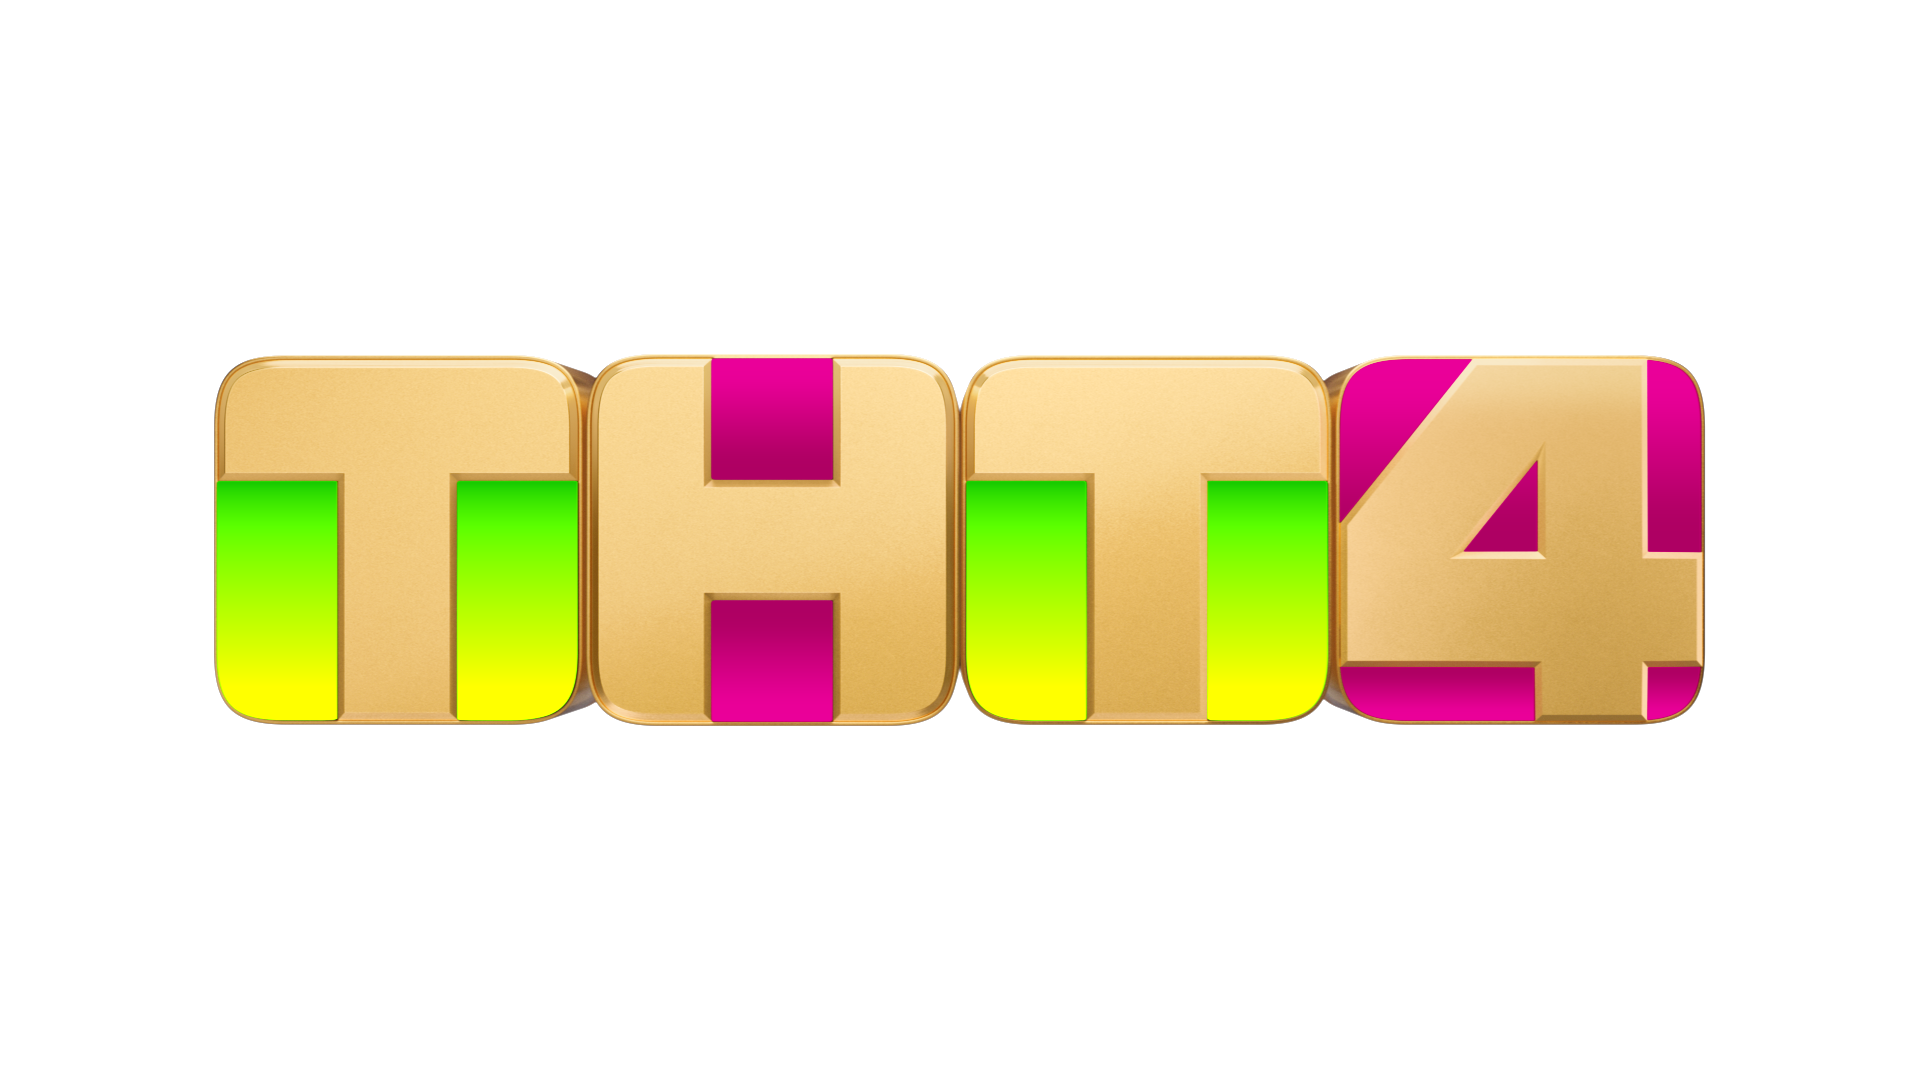 Тнт4 2023. Эмблема канала ТНТ 4. ТНТ 4 логотип 2023. Тет (Телеканал). Эфир телеканала 4